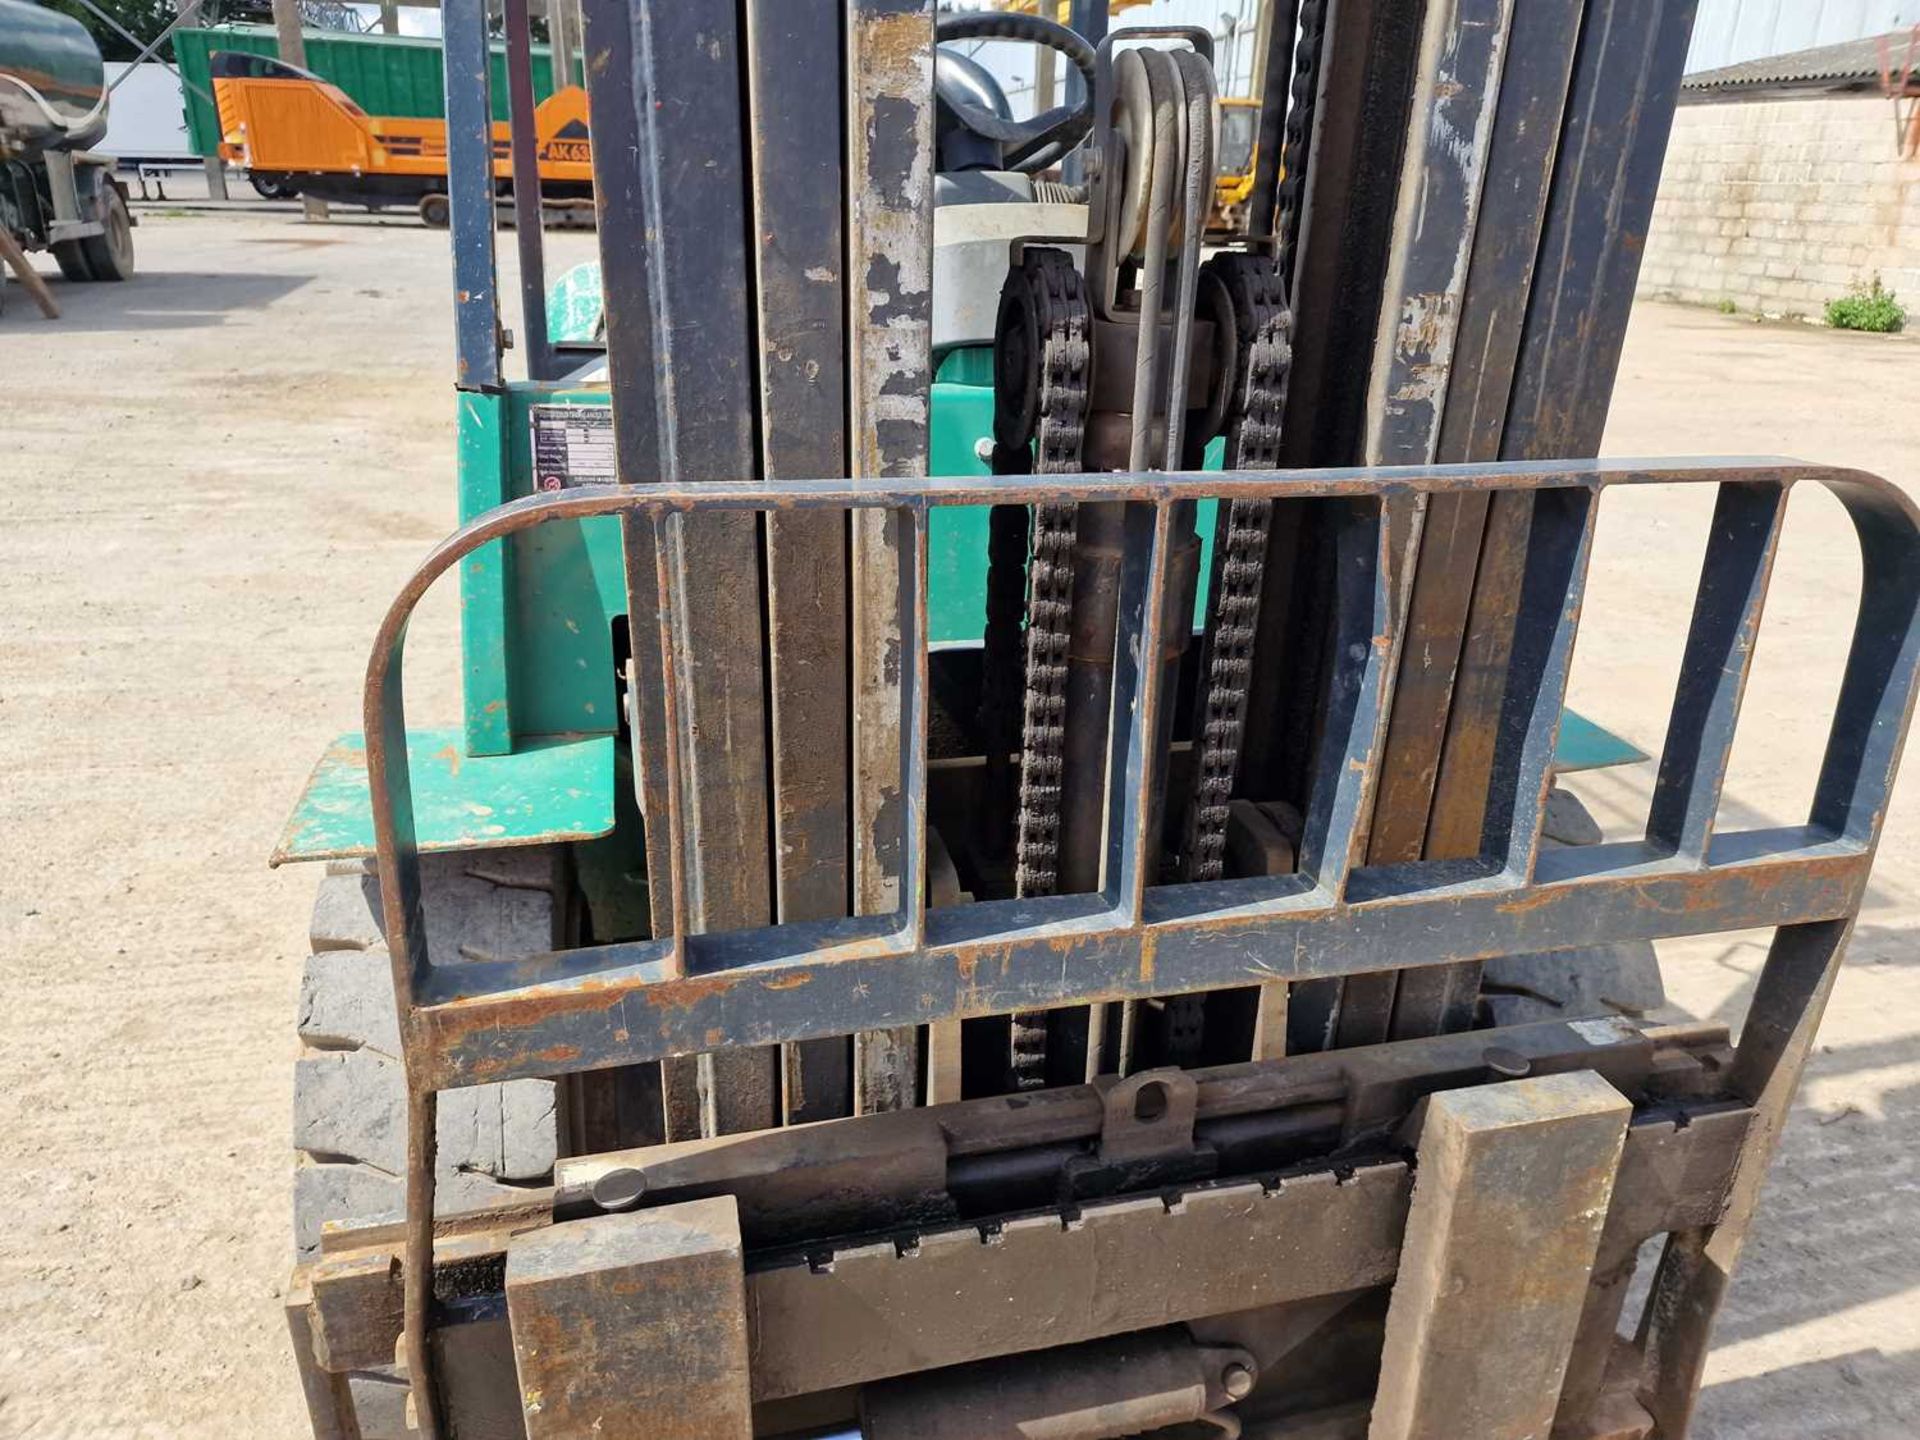 2015 Zhejiang FD40T 4 Ton Diesel Forklift, 3 Stage Free Lift Mast, Side Shift, Forks - Image 8 of 19